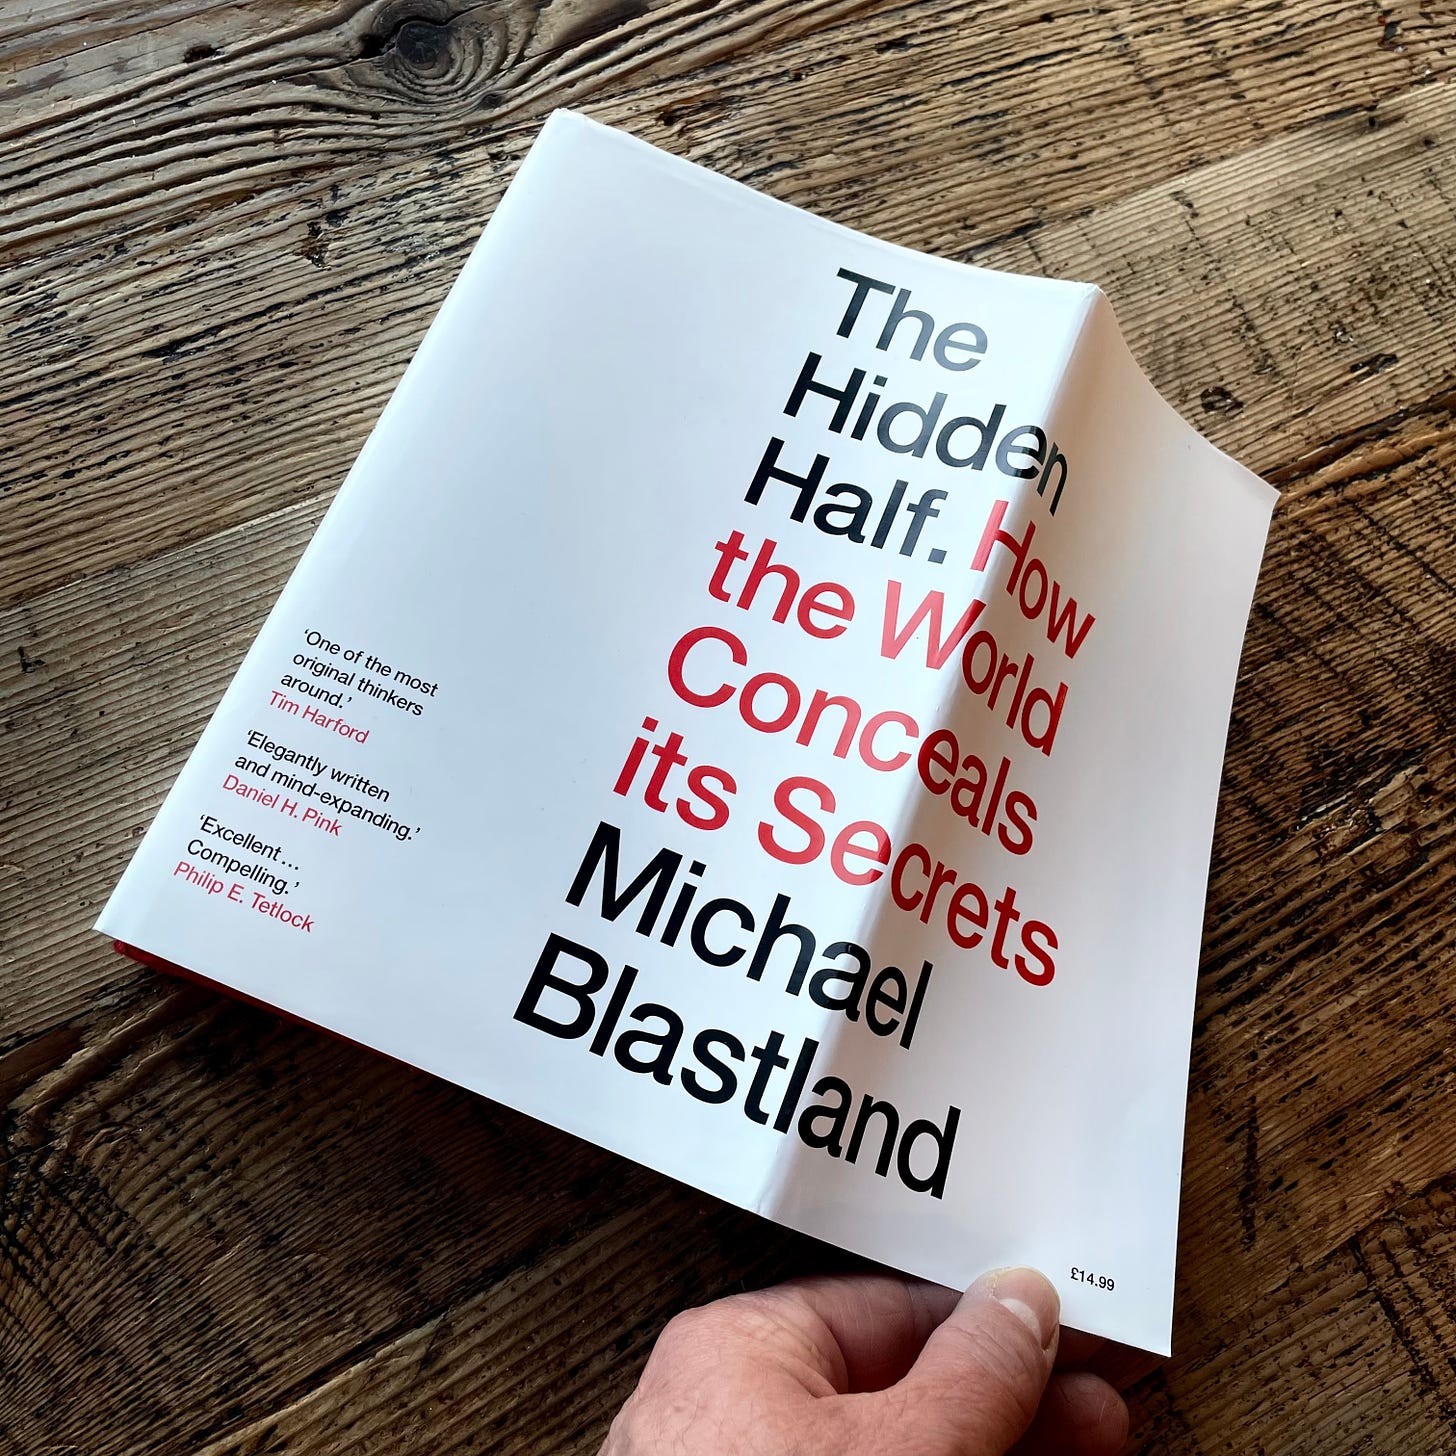 Michael Blastland.The Hidden Half: How the World Conceals Its Secrets. Atlantic Books, 2019.